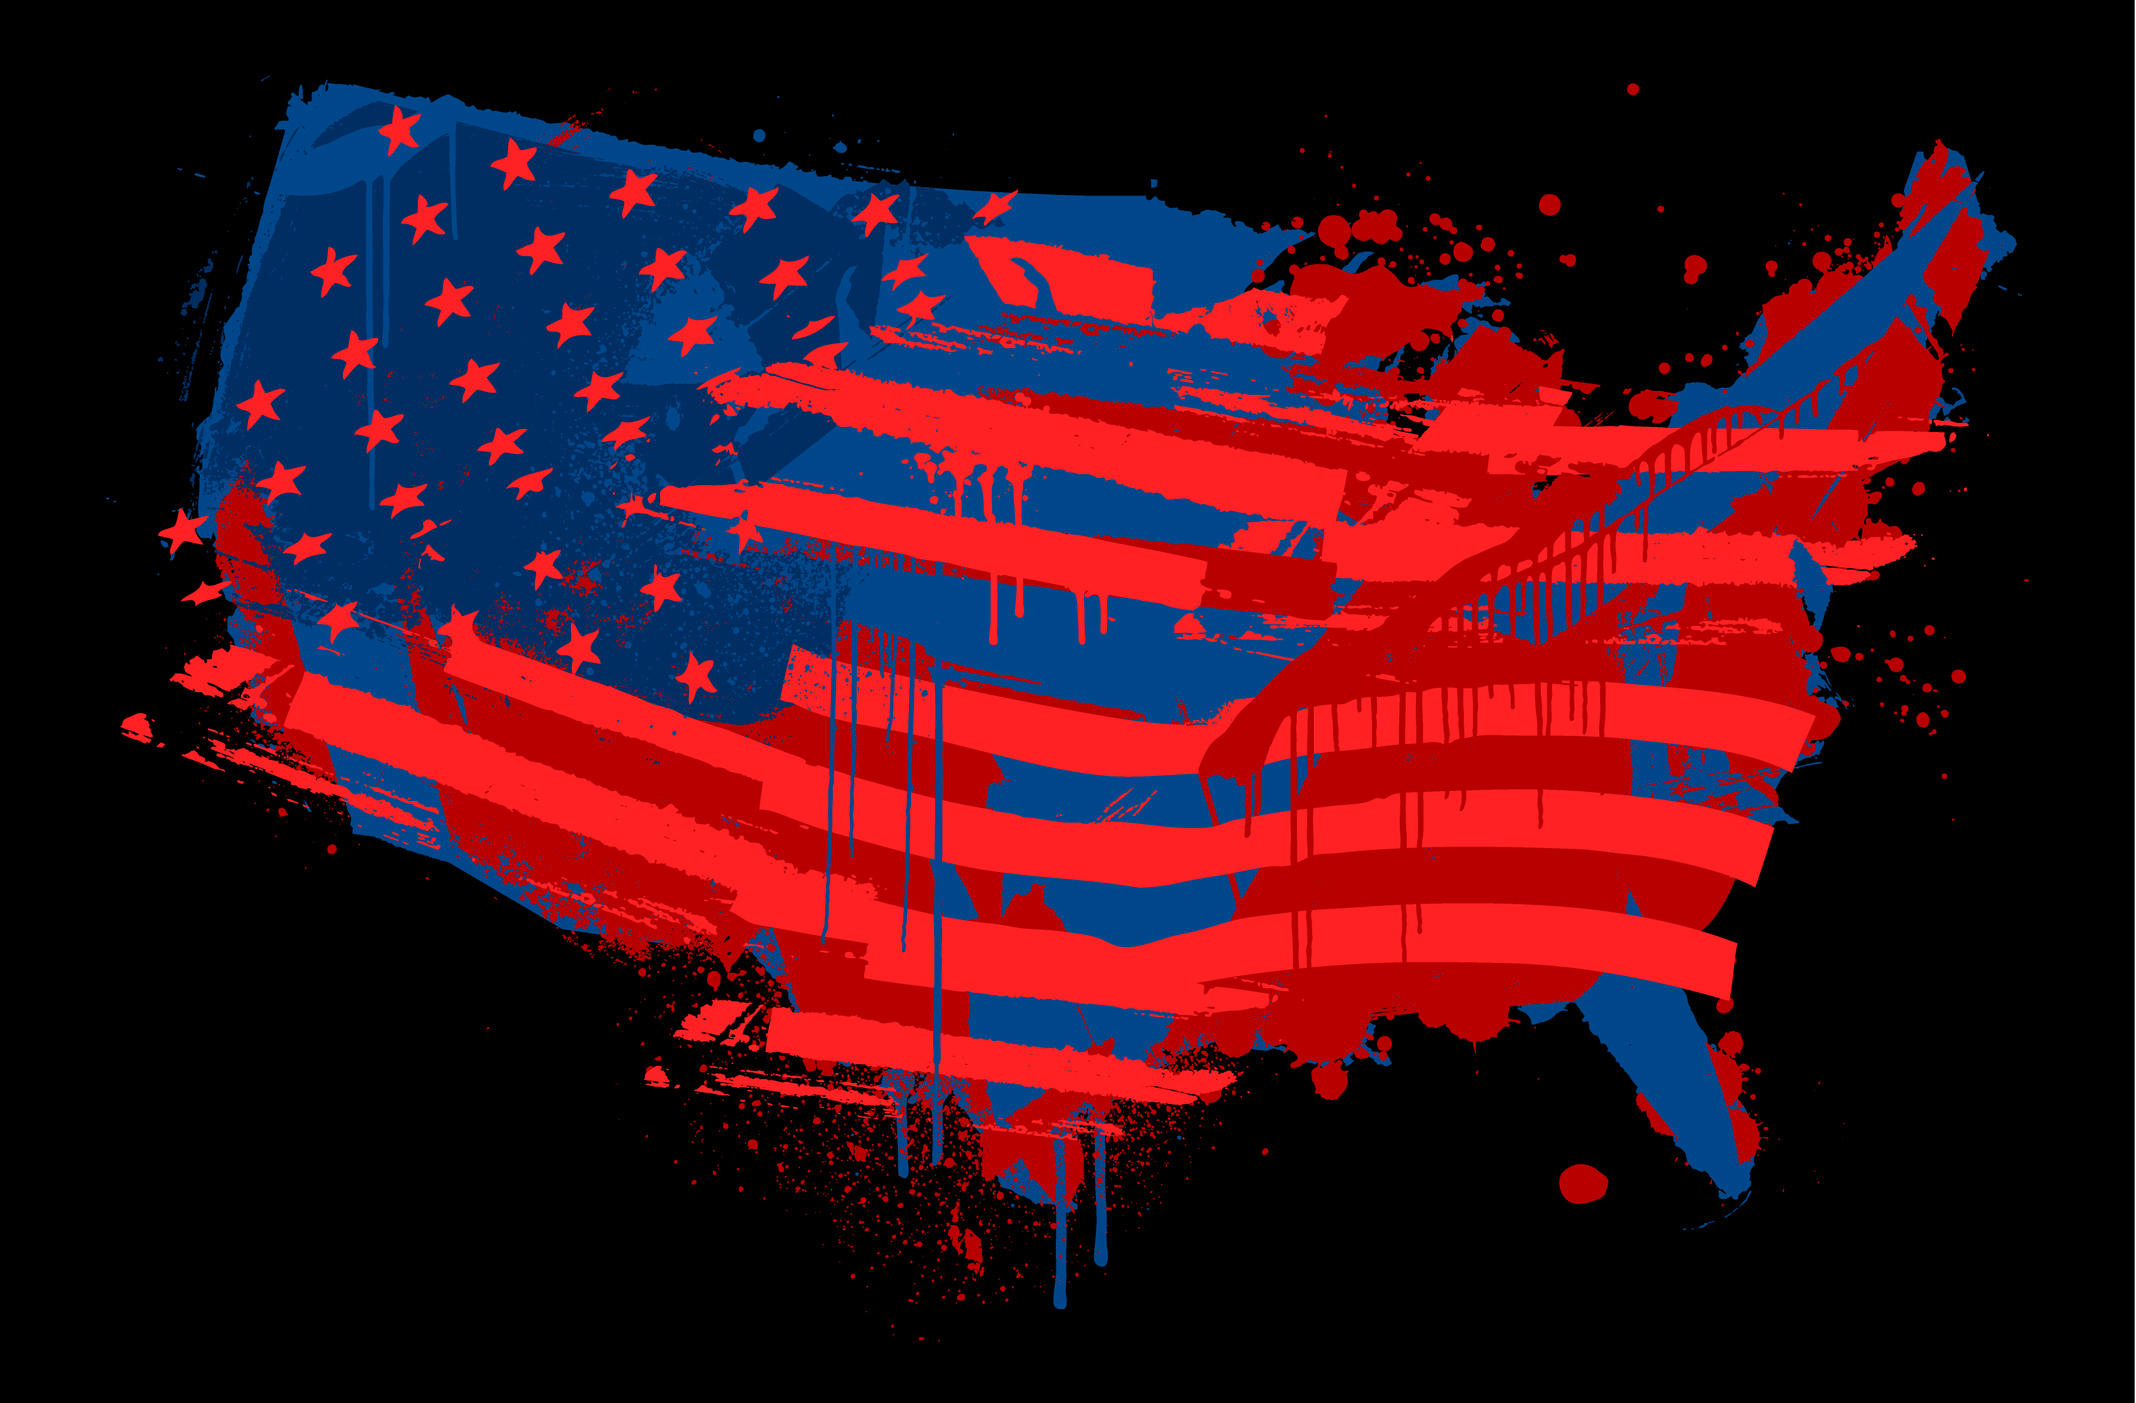 United States distressed flag map illustration